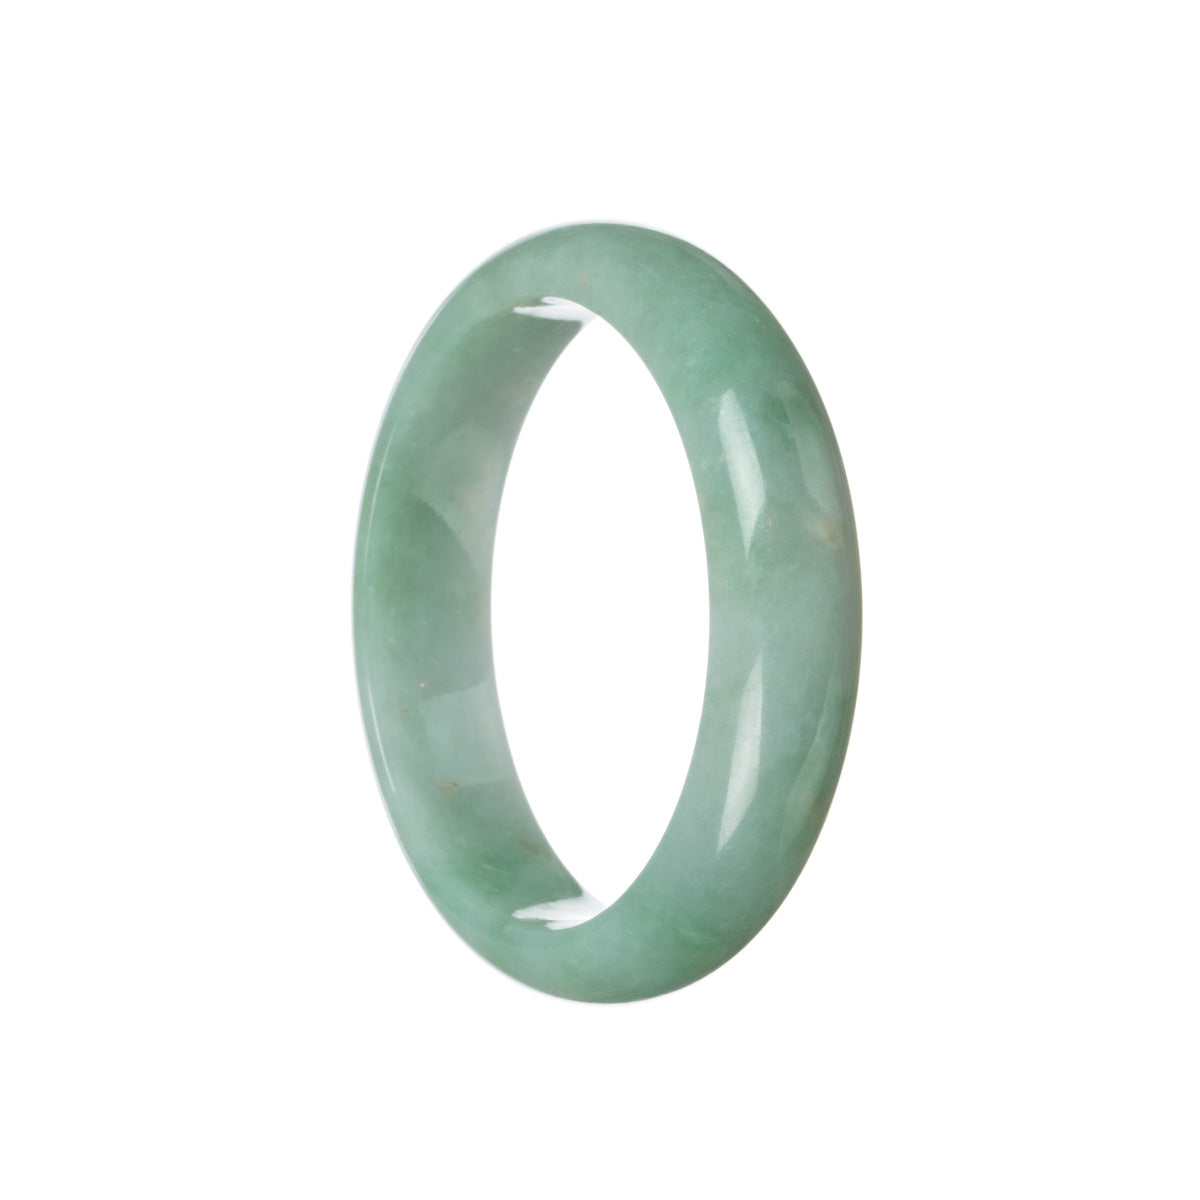 Real Grade A Green Burmese Jade Bangle Bracelet - 58mm Half Moon